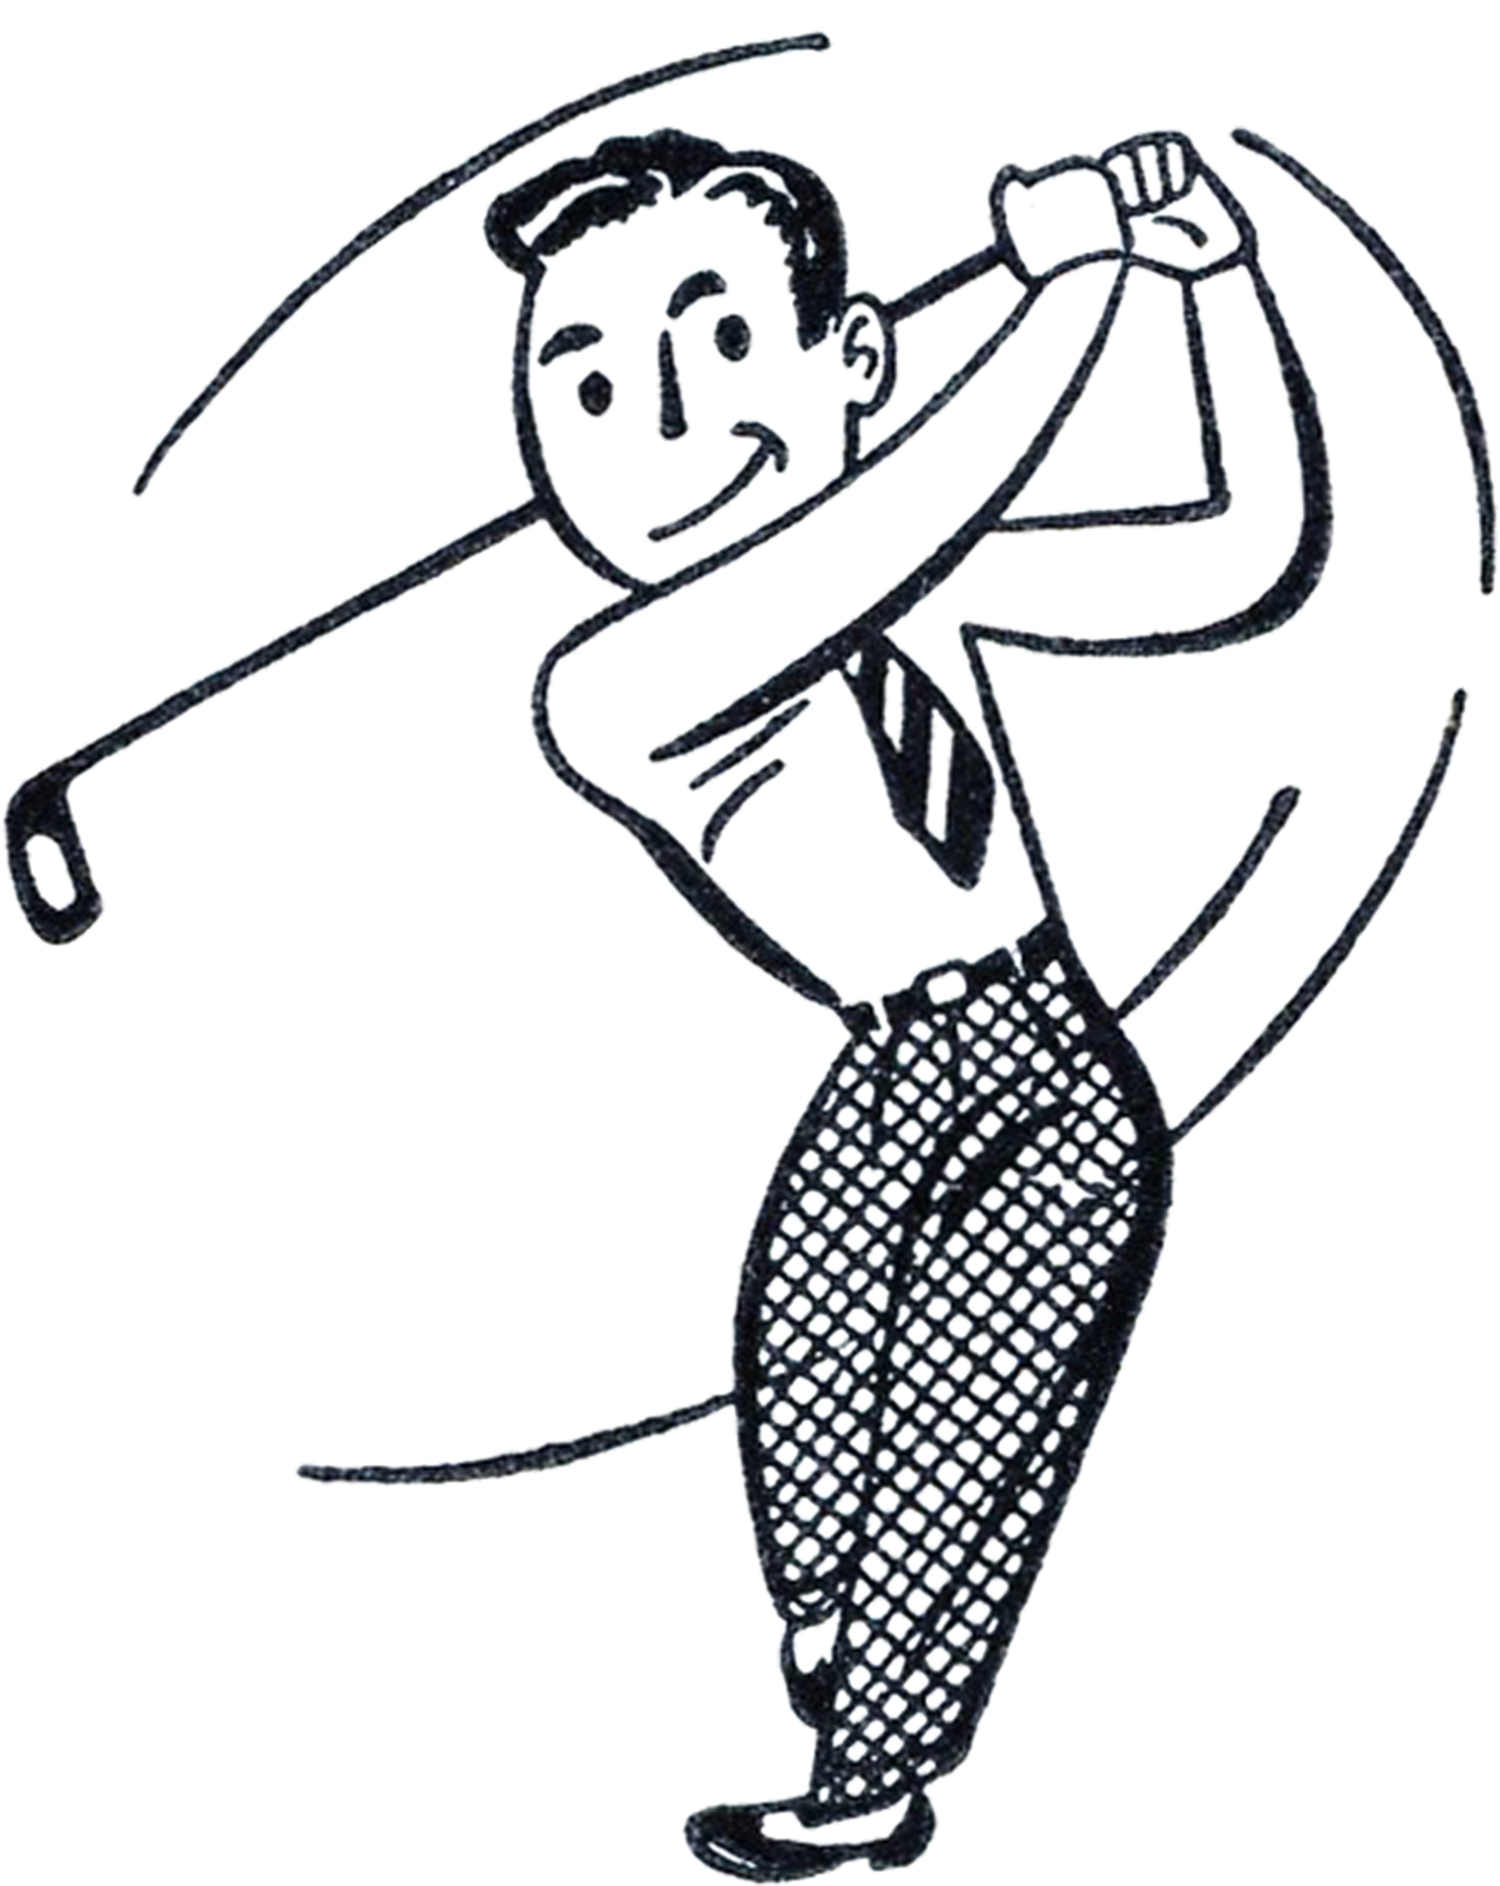 Retro Golf Clip Art